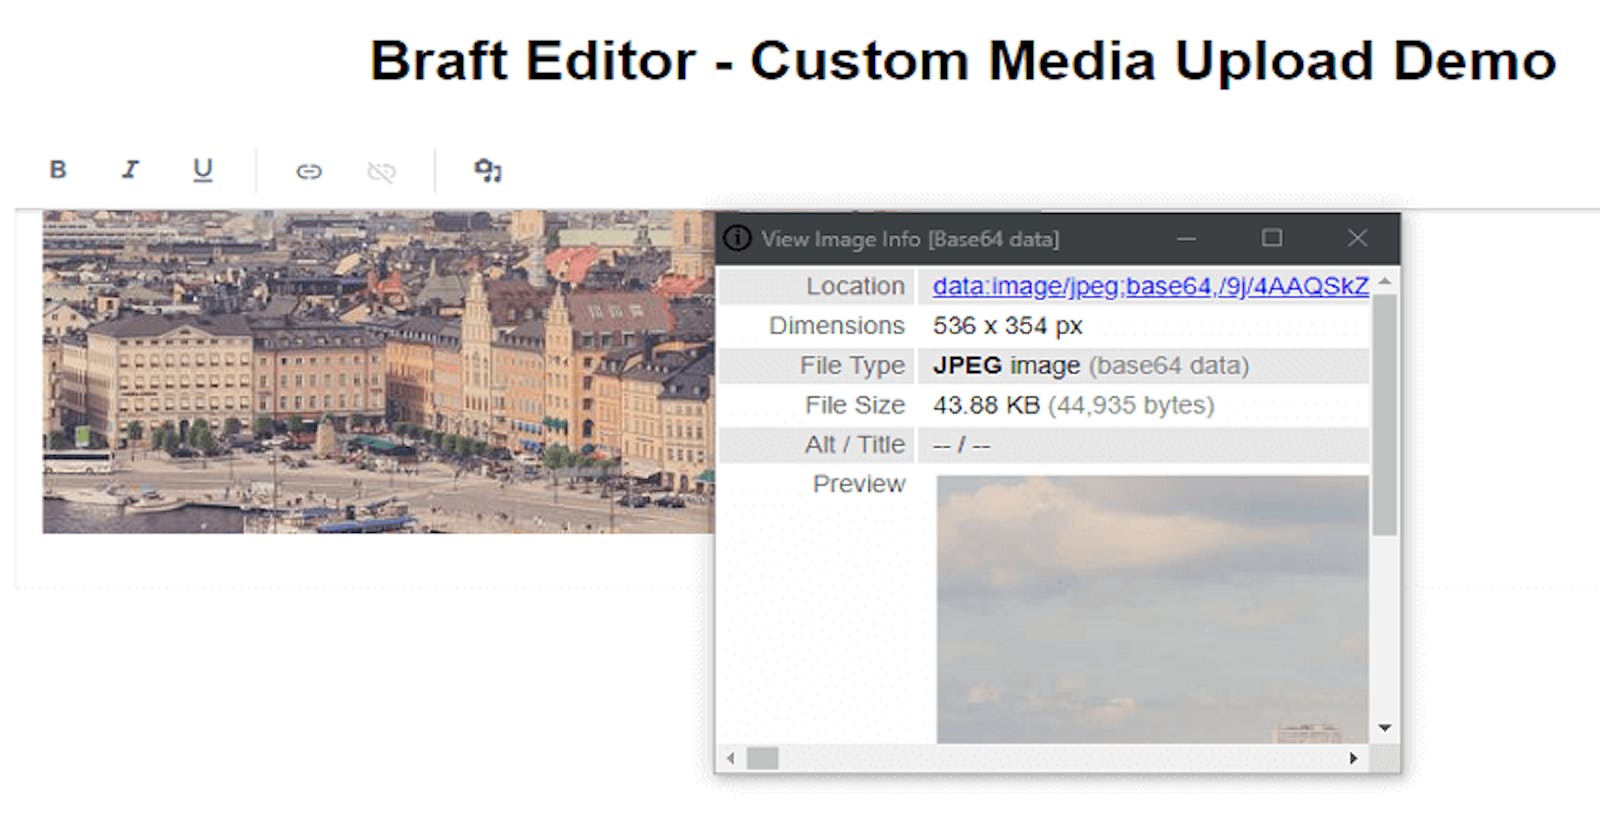 Braft Editor - Custom Media Upload and Validation